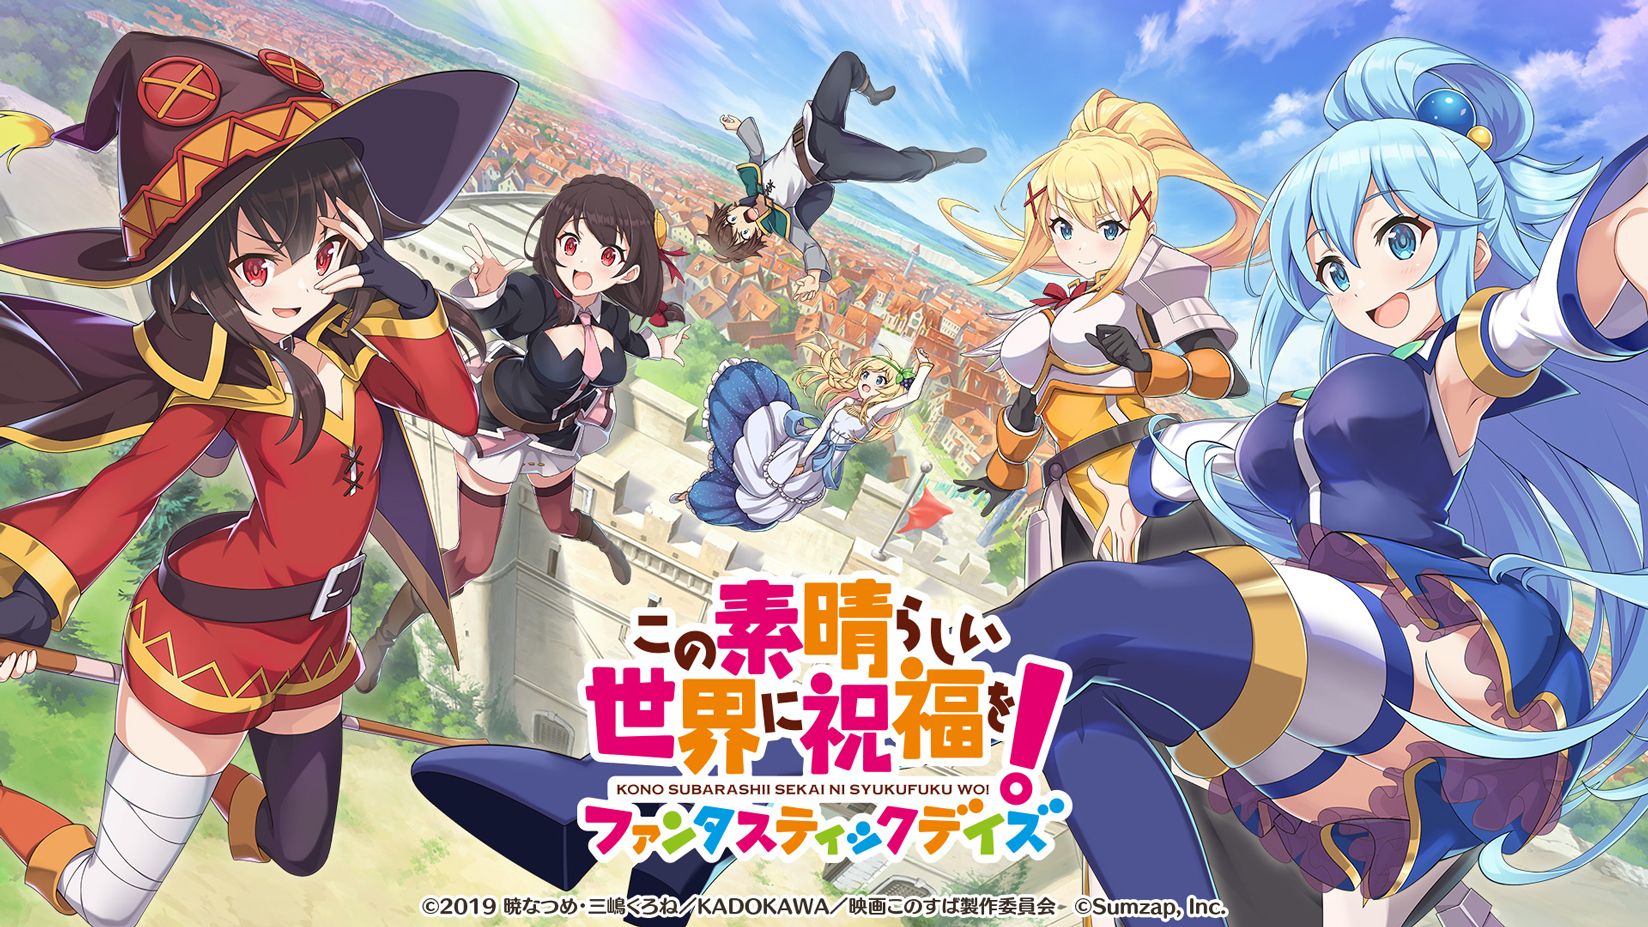 Konosuba Megumin Spin-Off Anime Confirms Release